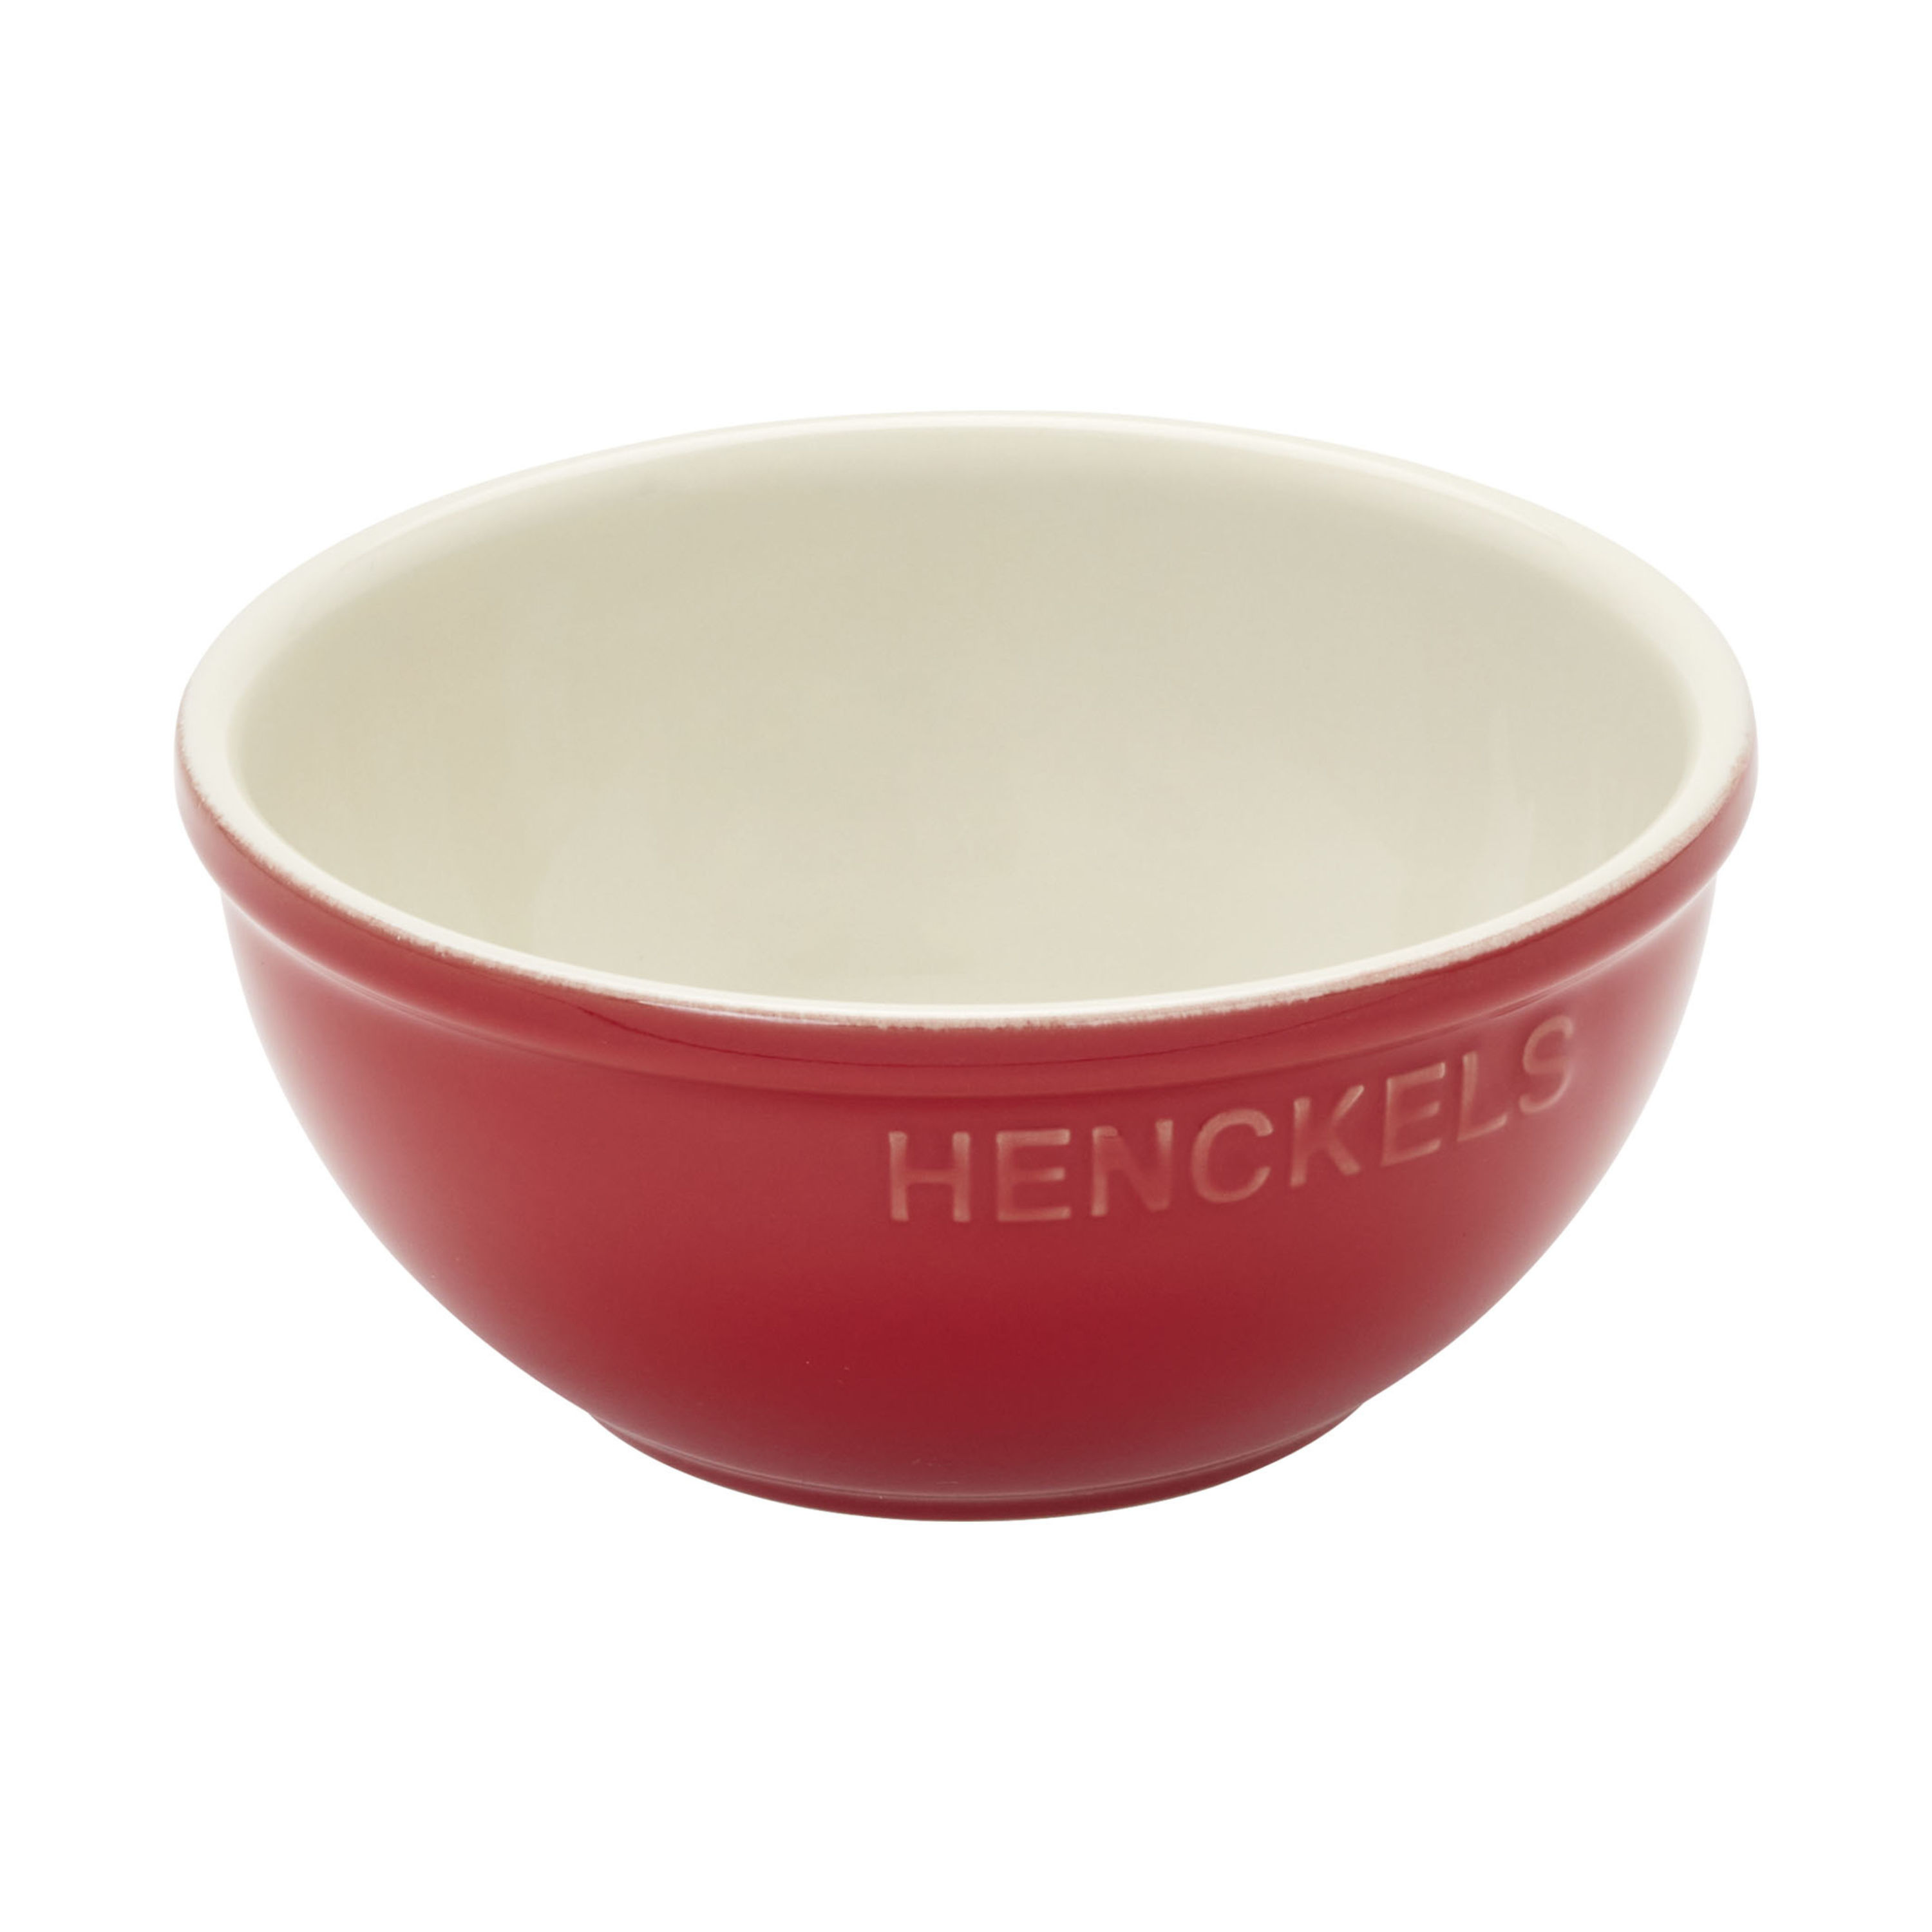 Henckels Ceramic 8-Piece Bakeware Set Review 2022